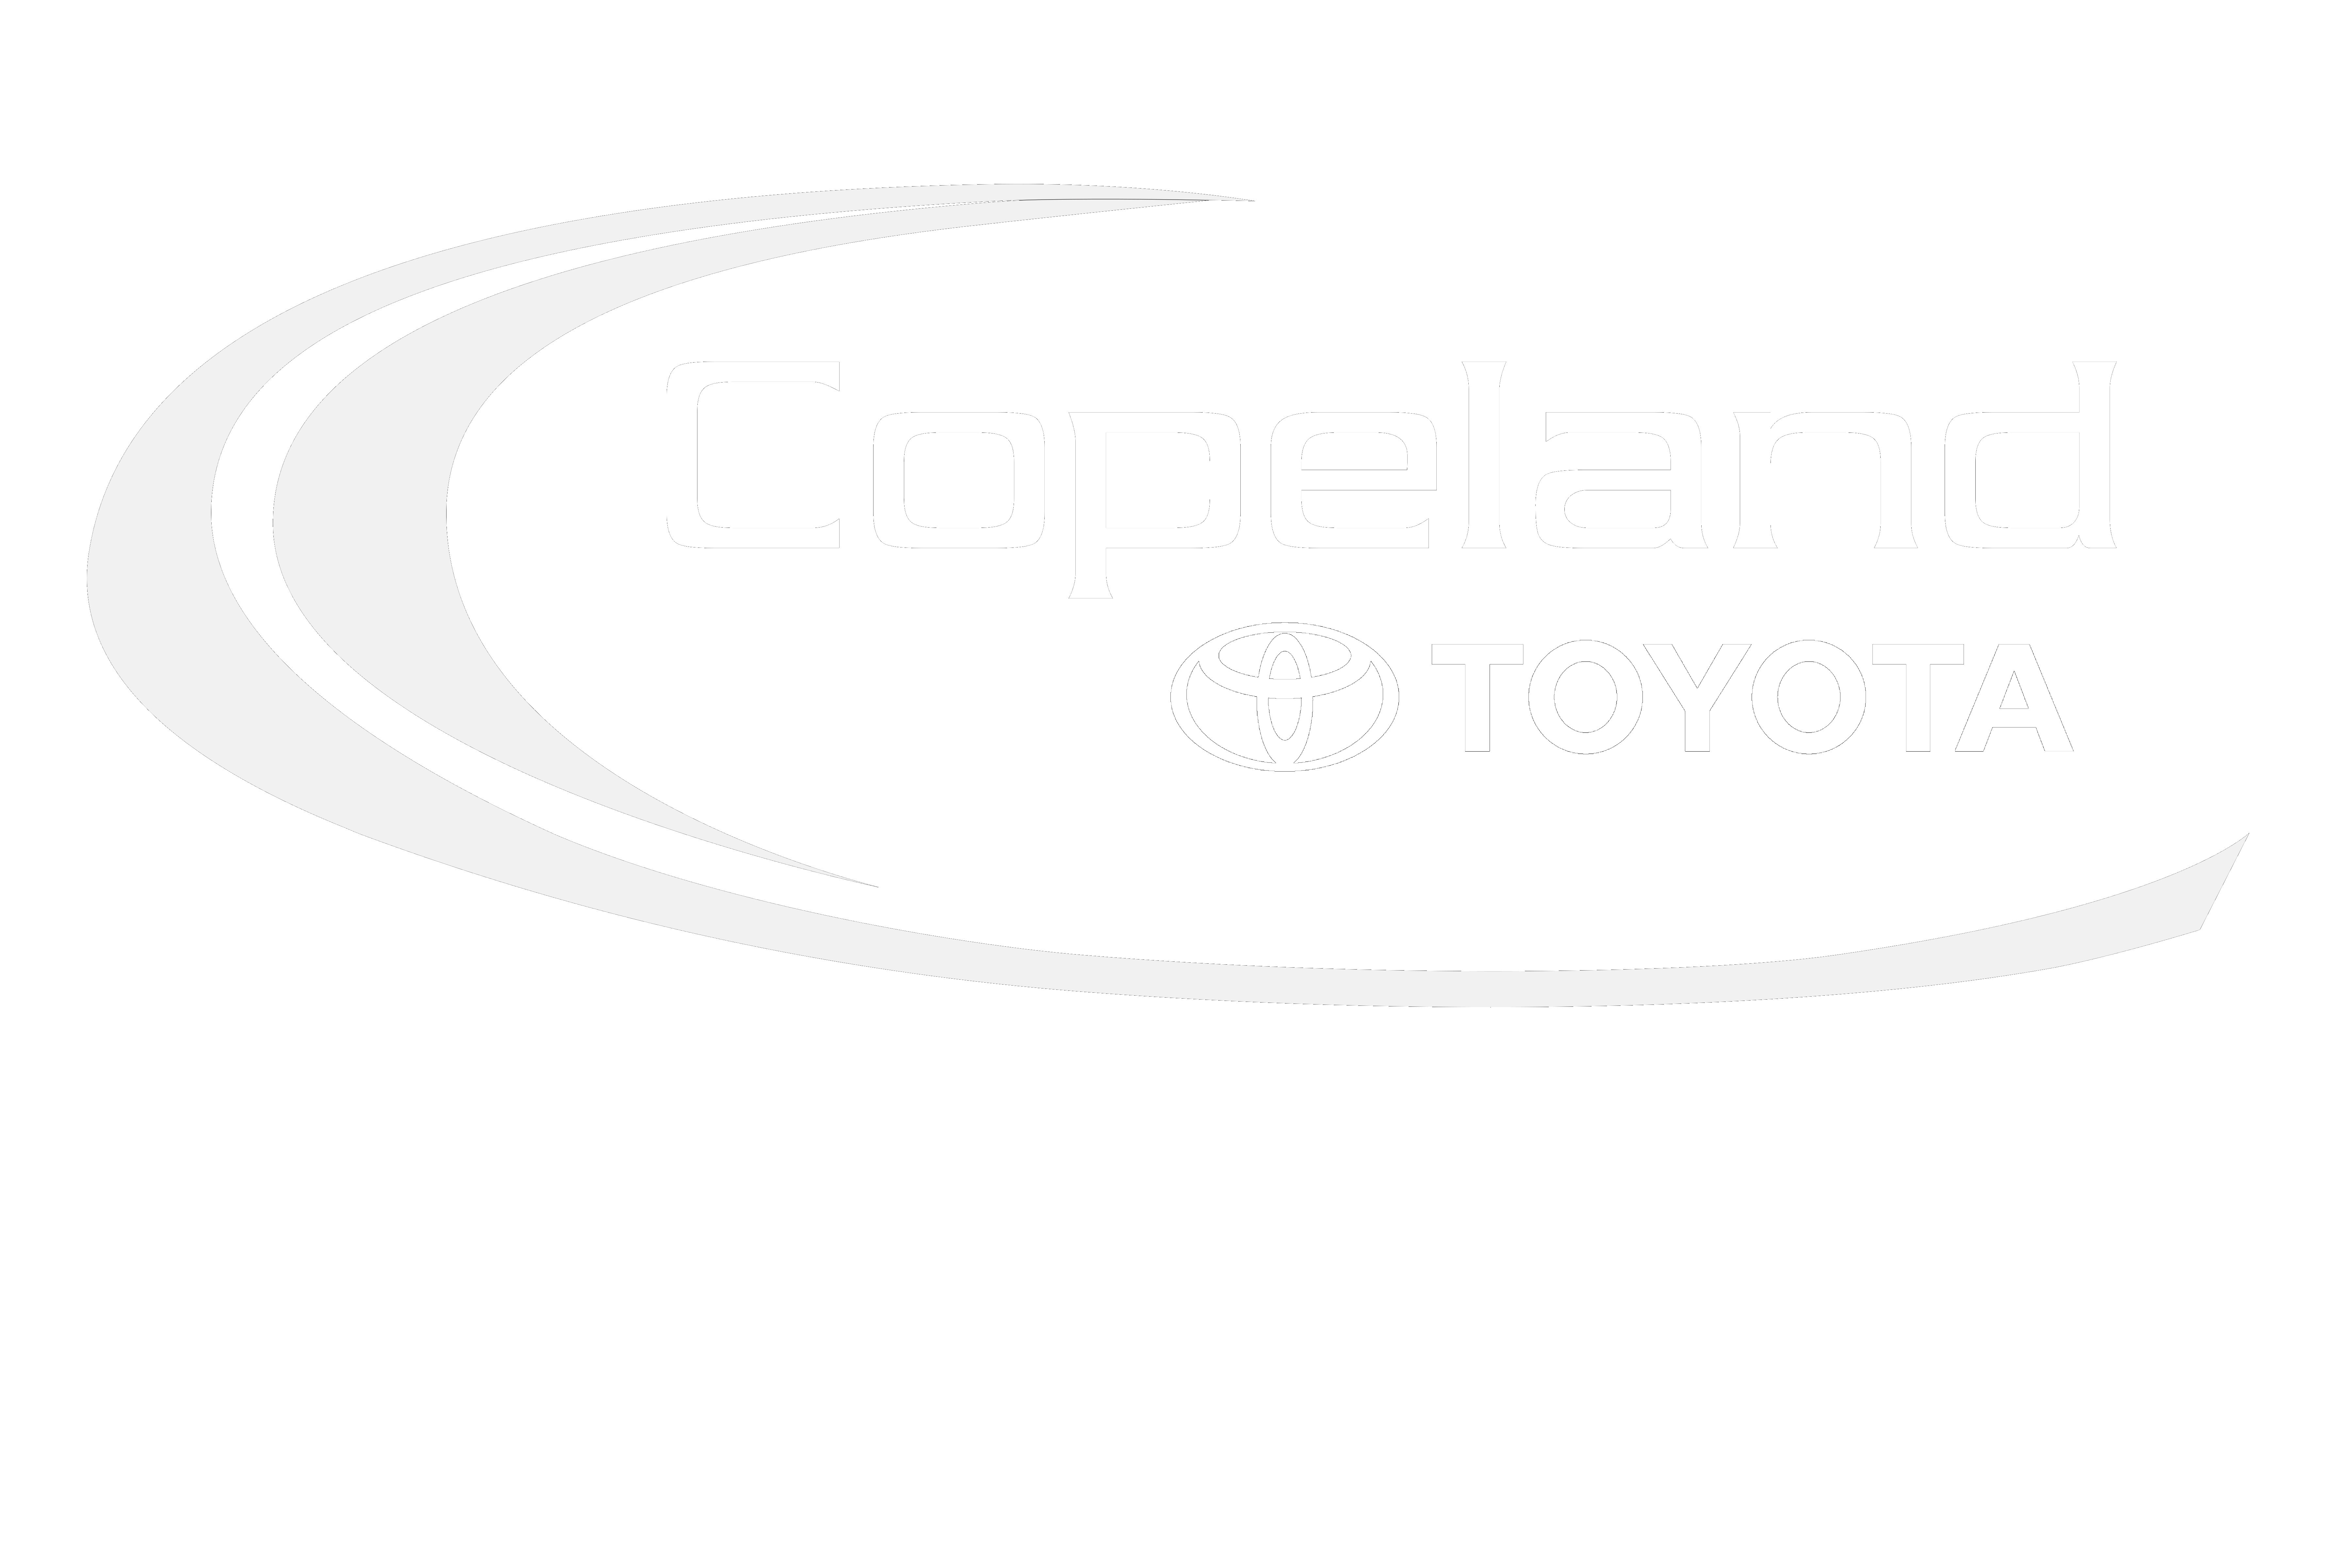 Copeland Toyota